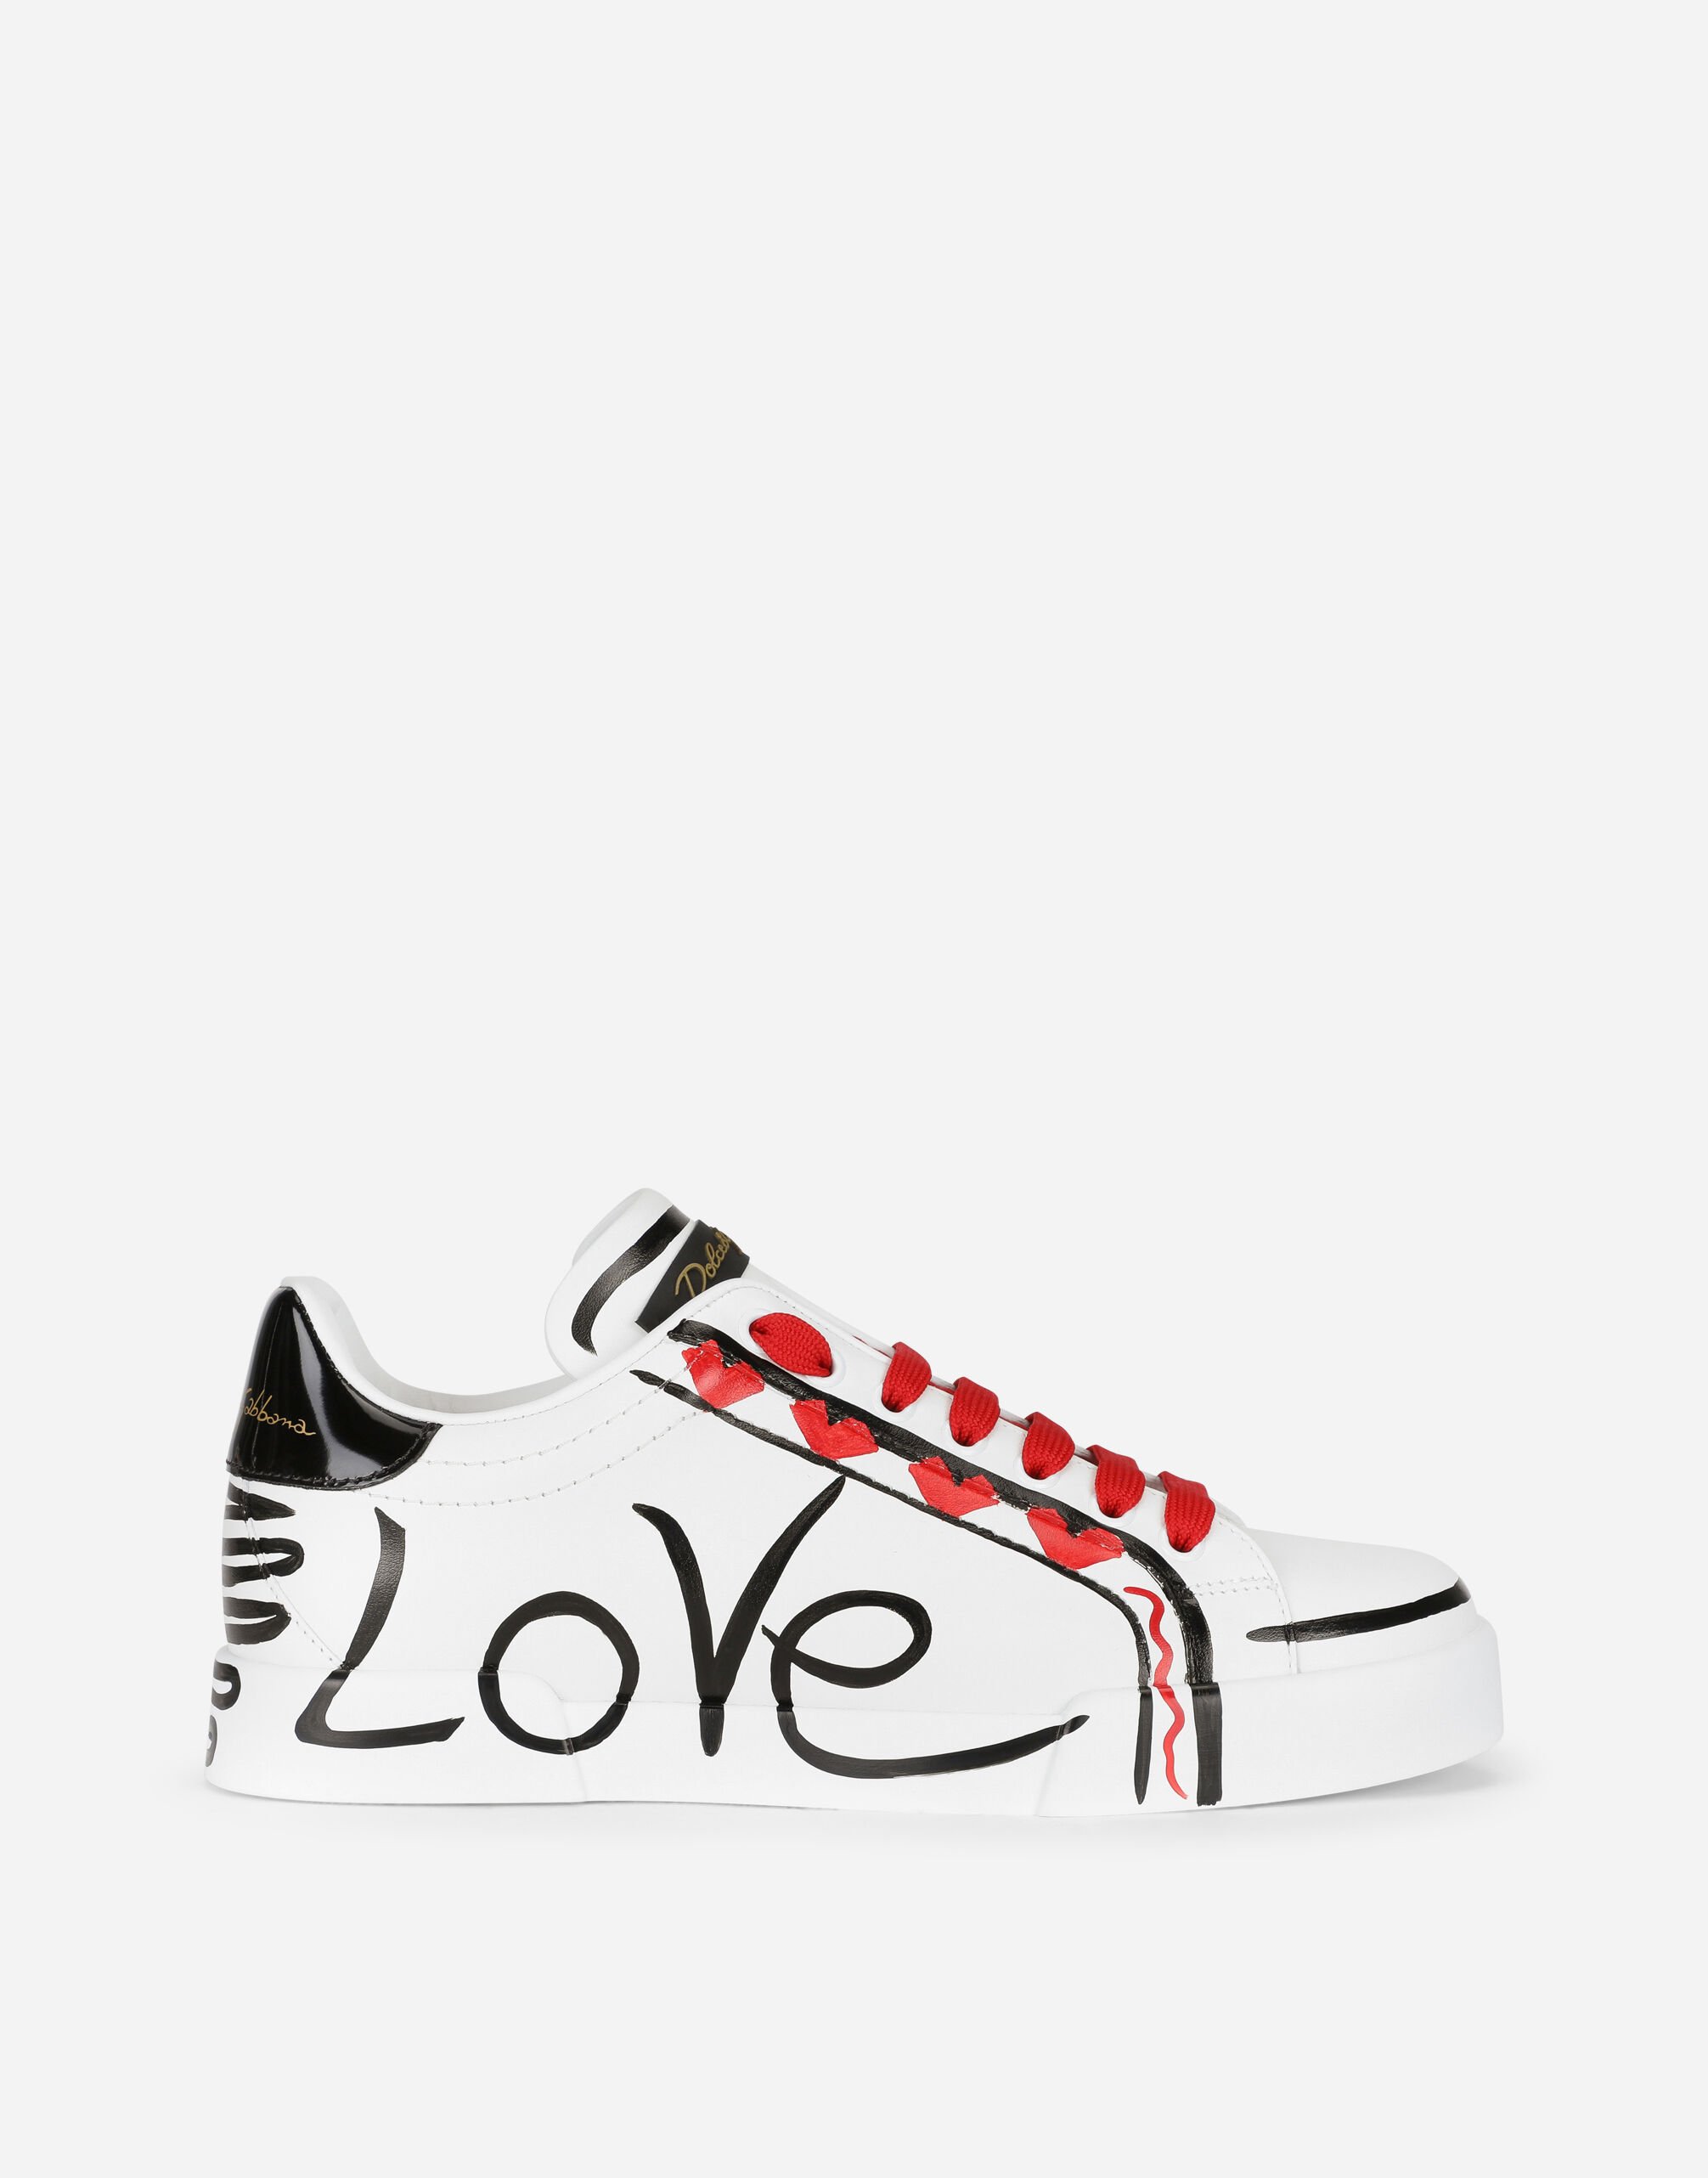 Dolce & Gabbana Sneaker Portofino Limited Edition WEISS CK1563B5845